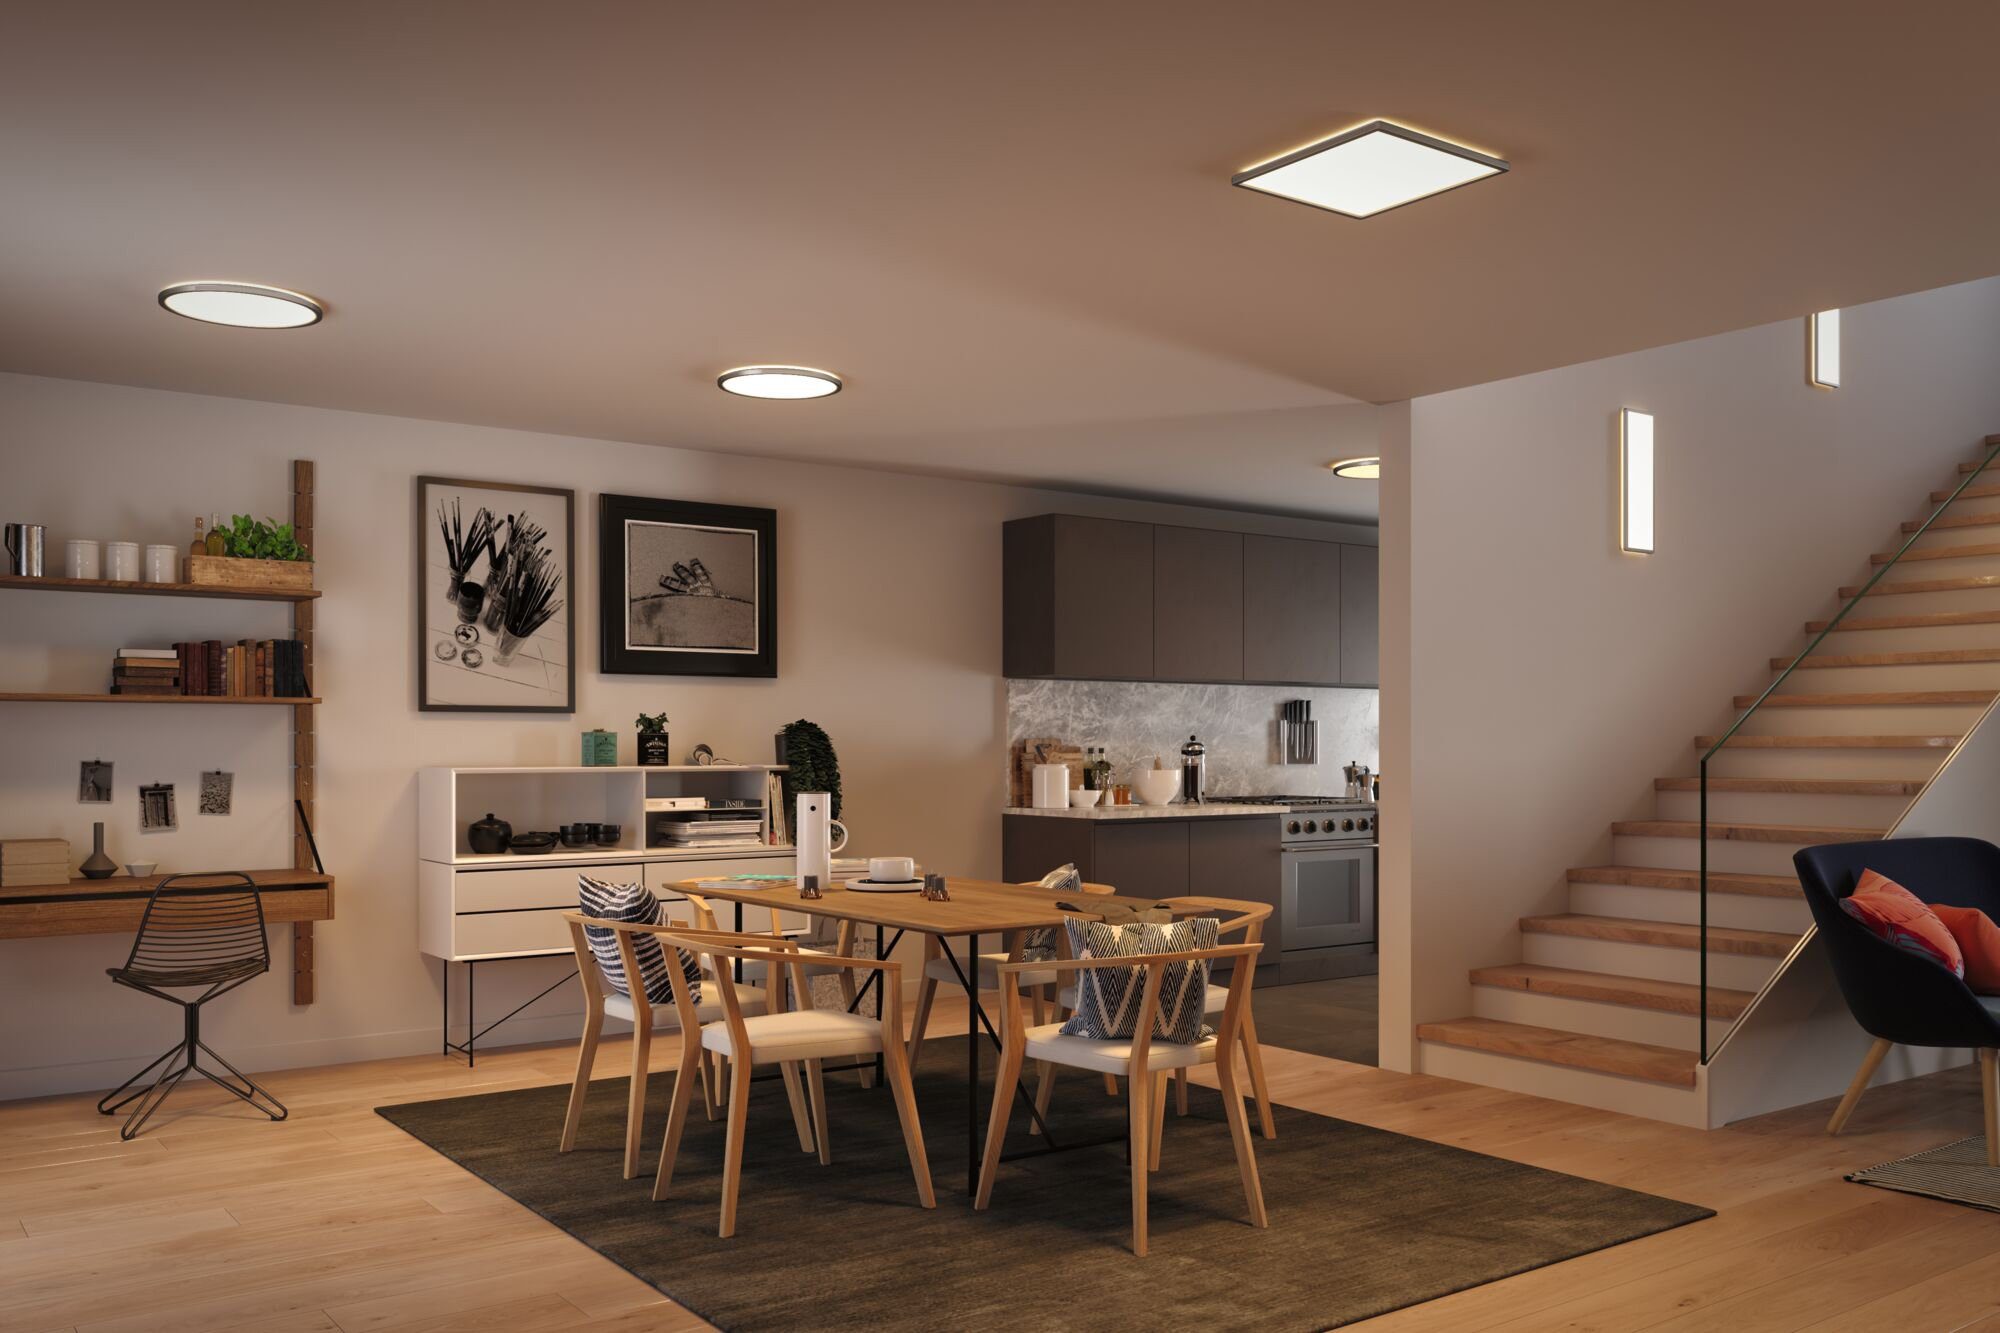 Atria fest LED Paulmann integriert, Shine, Panel LED Warmweiß